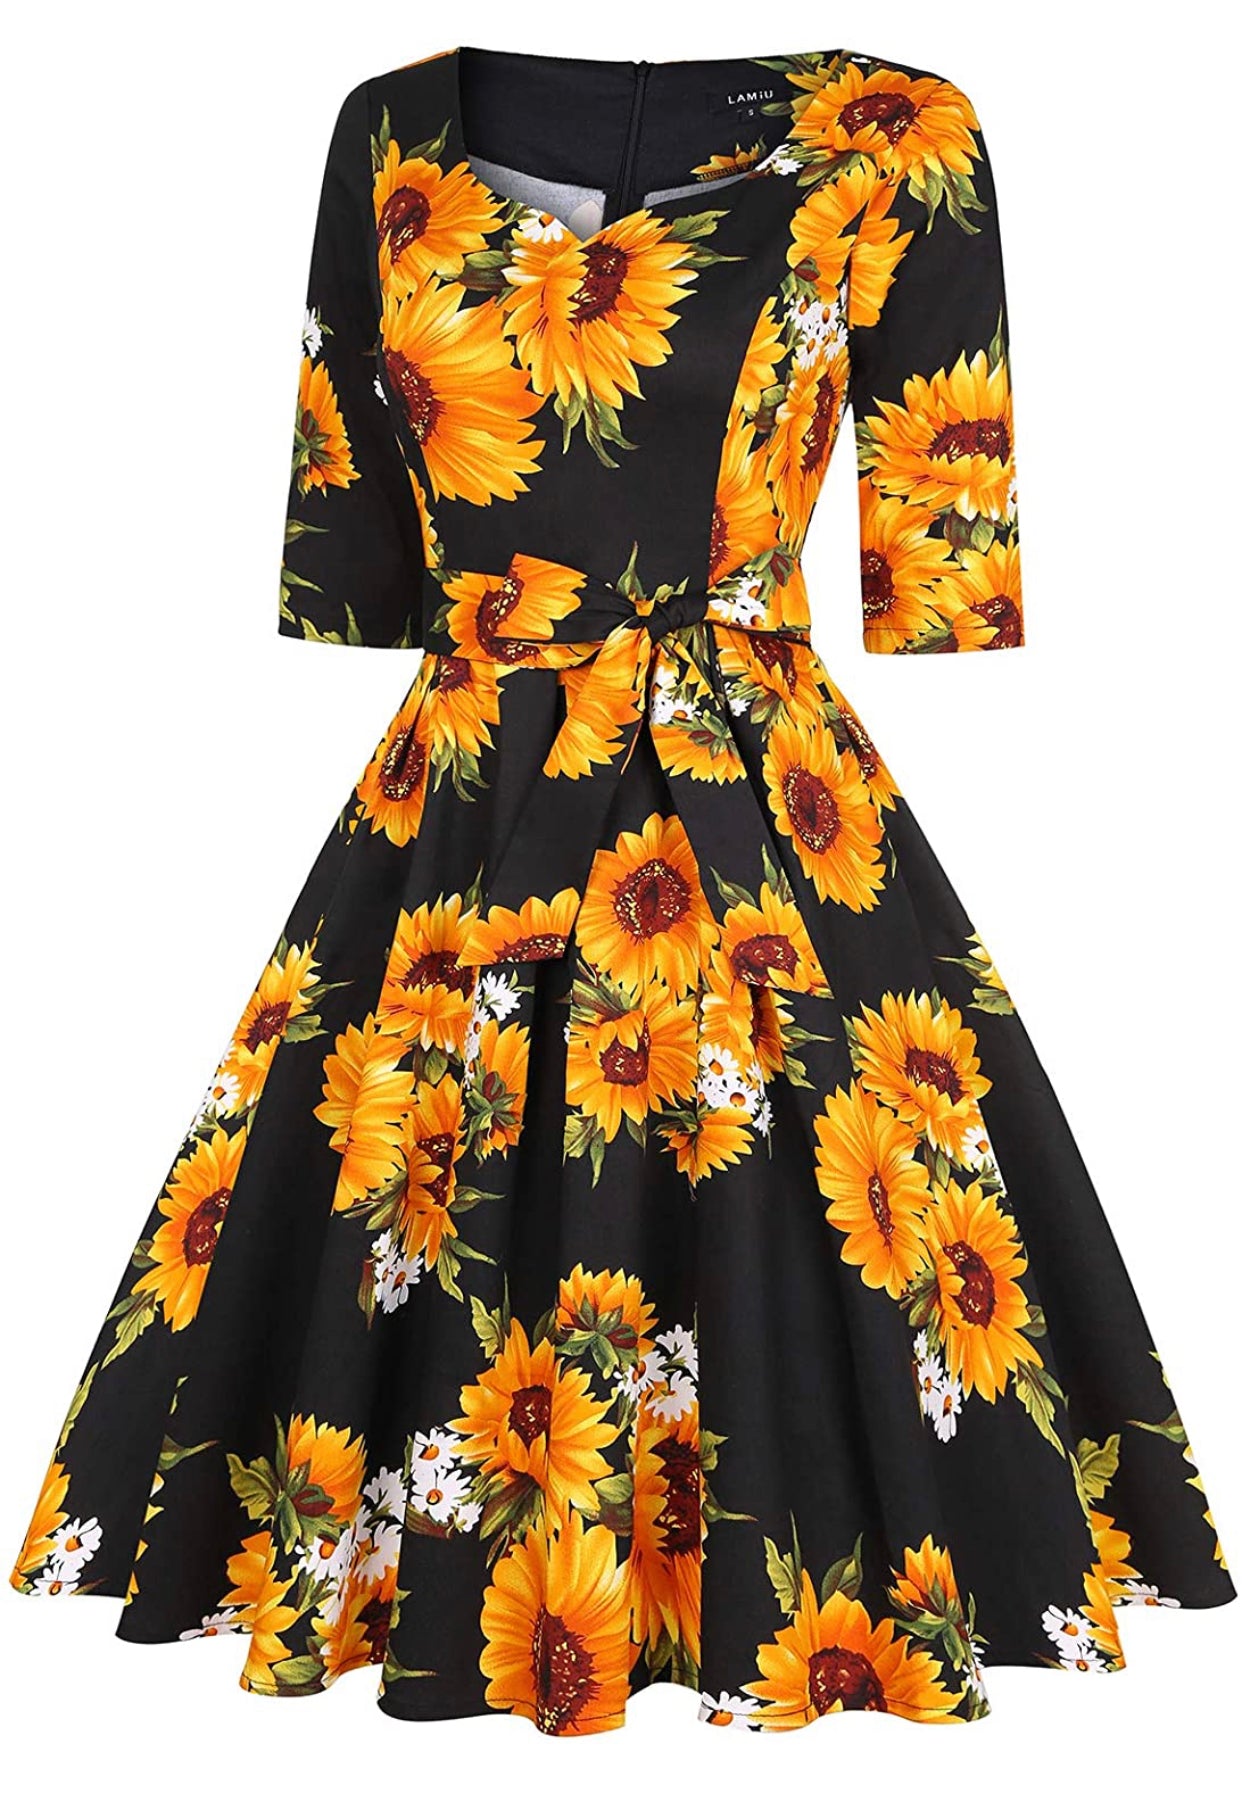 Sweetheart Neckline Rockability Sunflower Black Dress, Sizes Small - 2XLarge (US Sized 4 - 22)